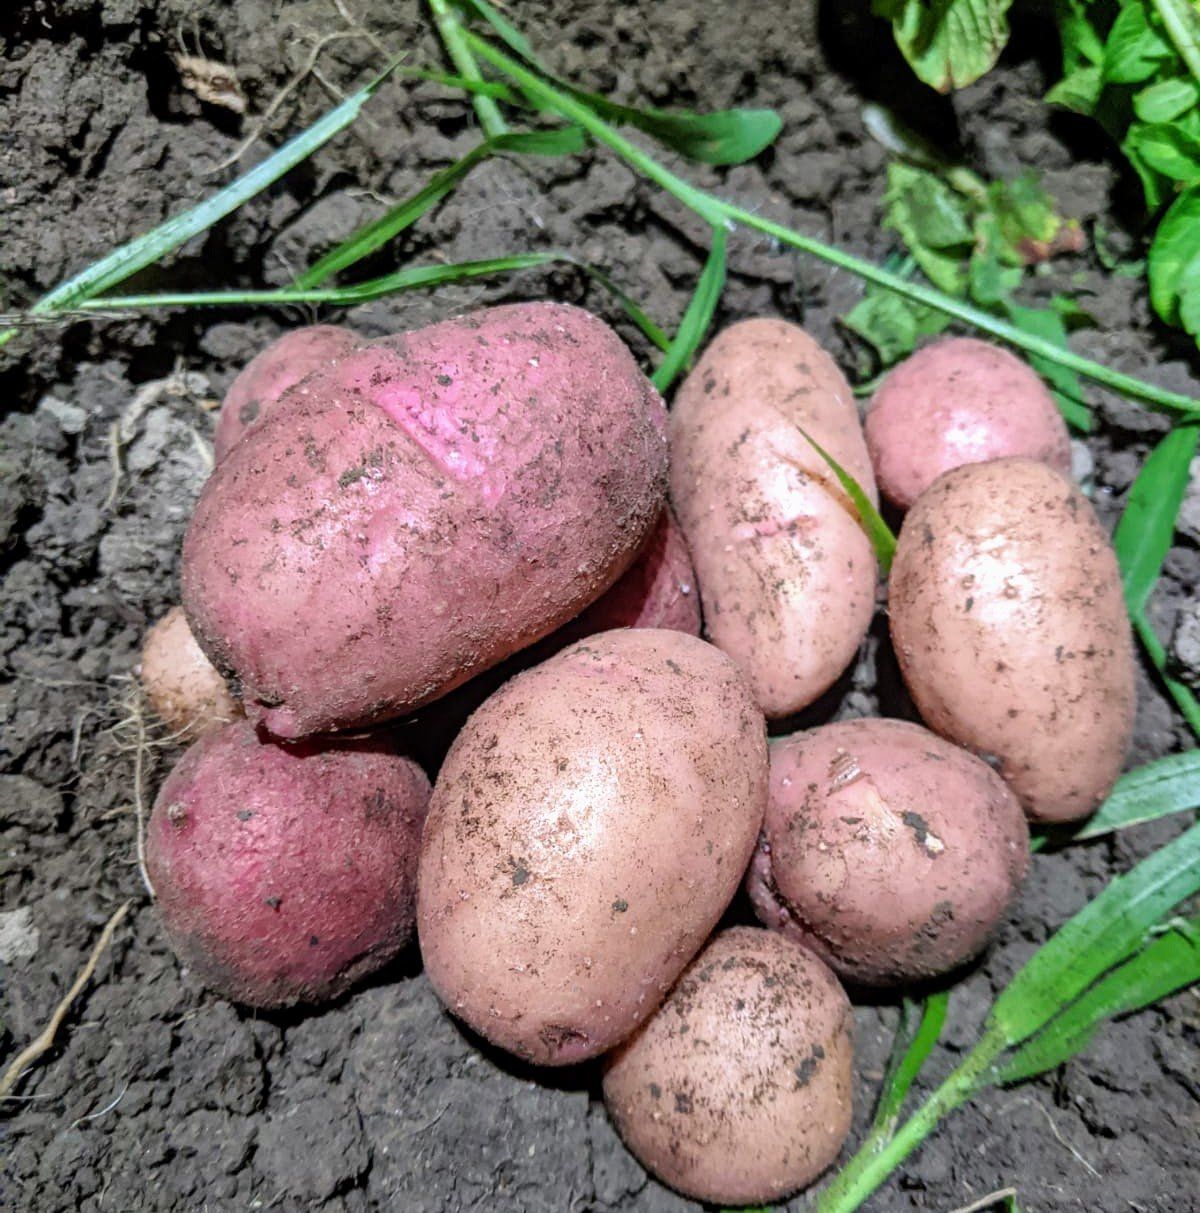 Previous Happening: Farm Share Week 13 - Potatoes!